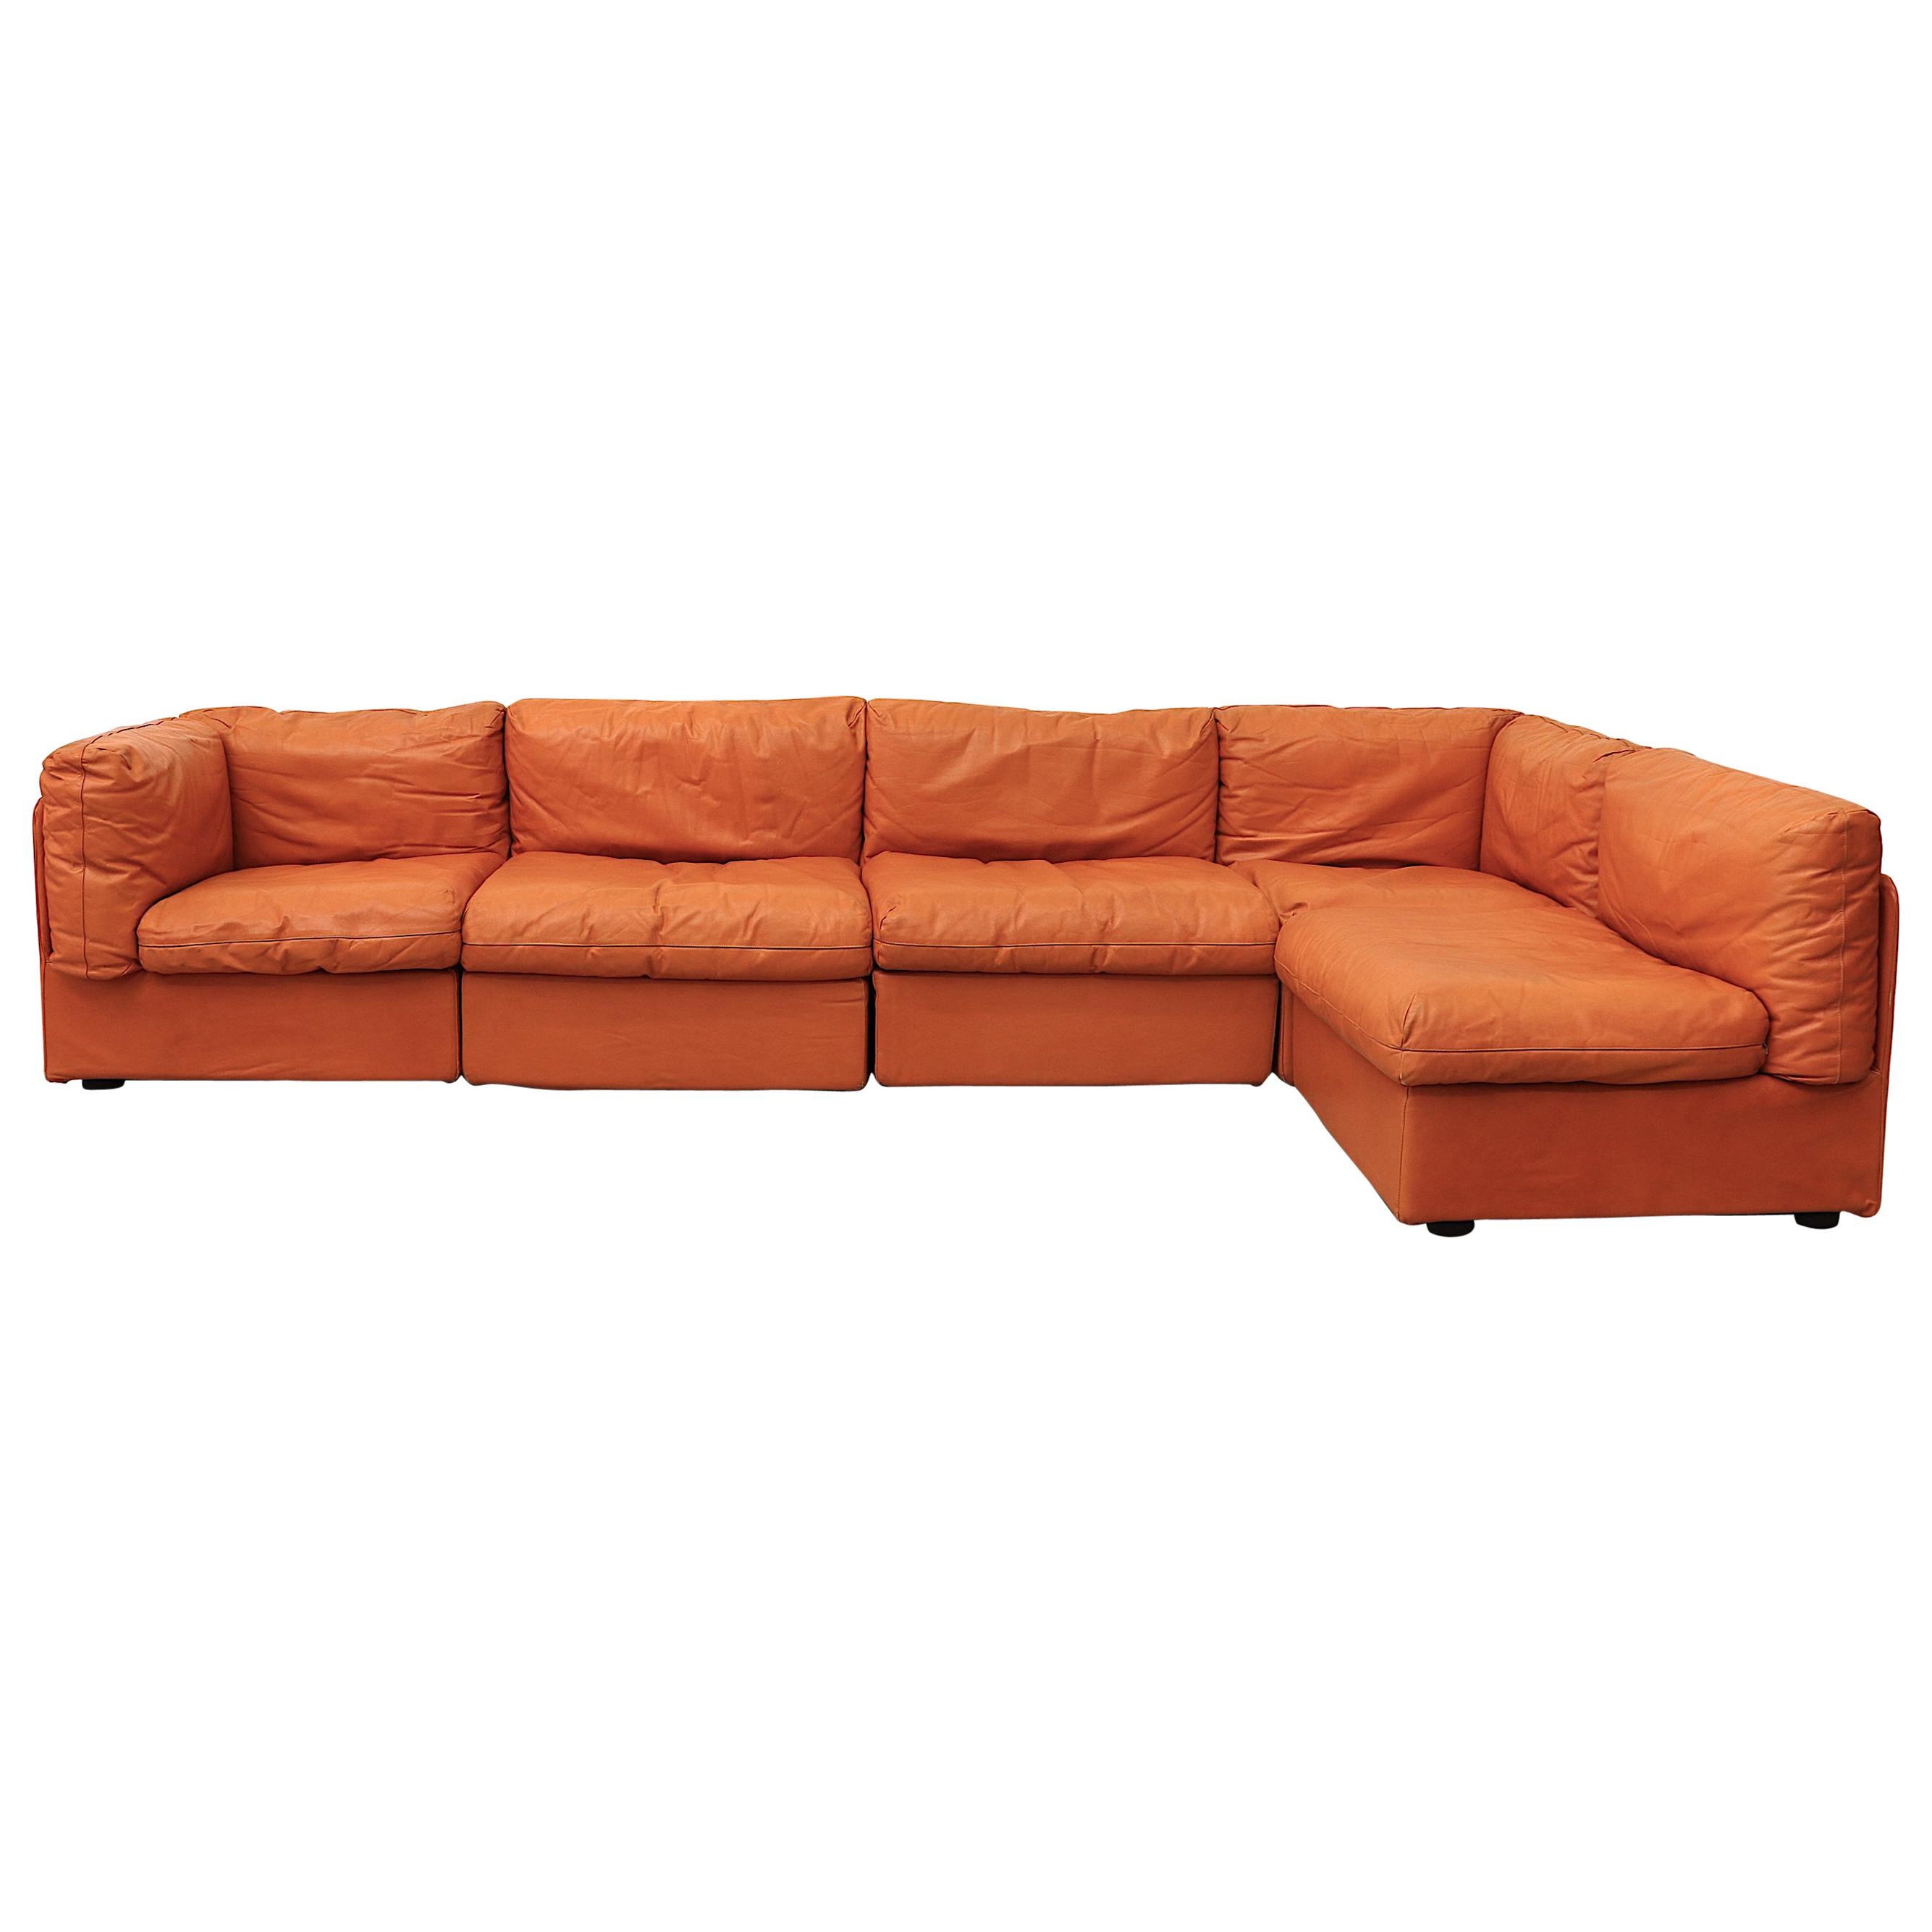 Bonacina Italian Orange Leather Sectional Sofa